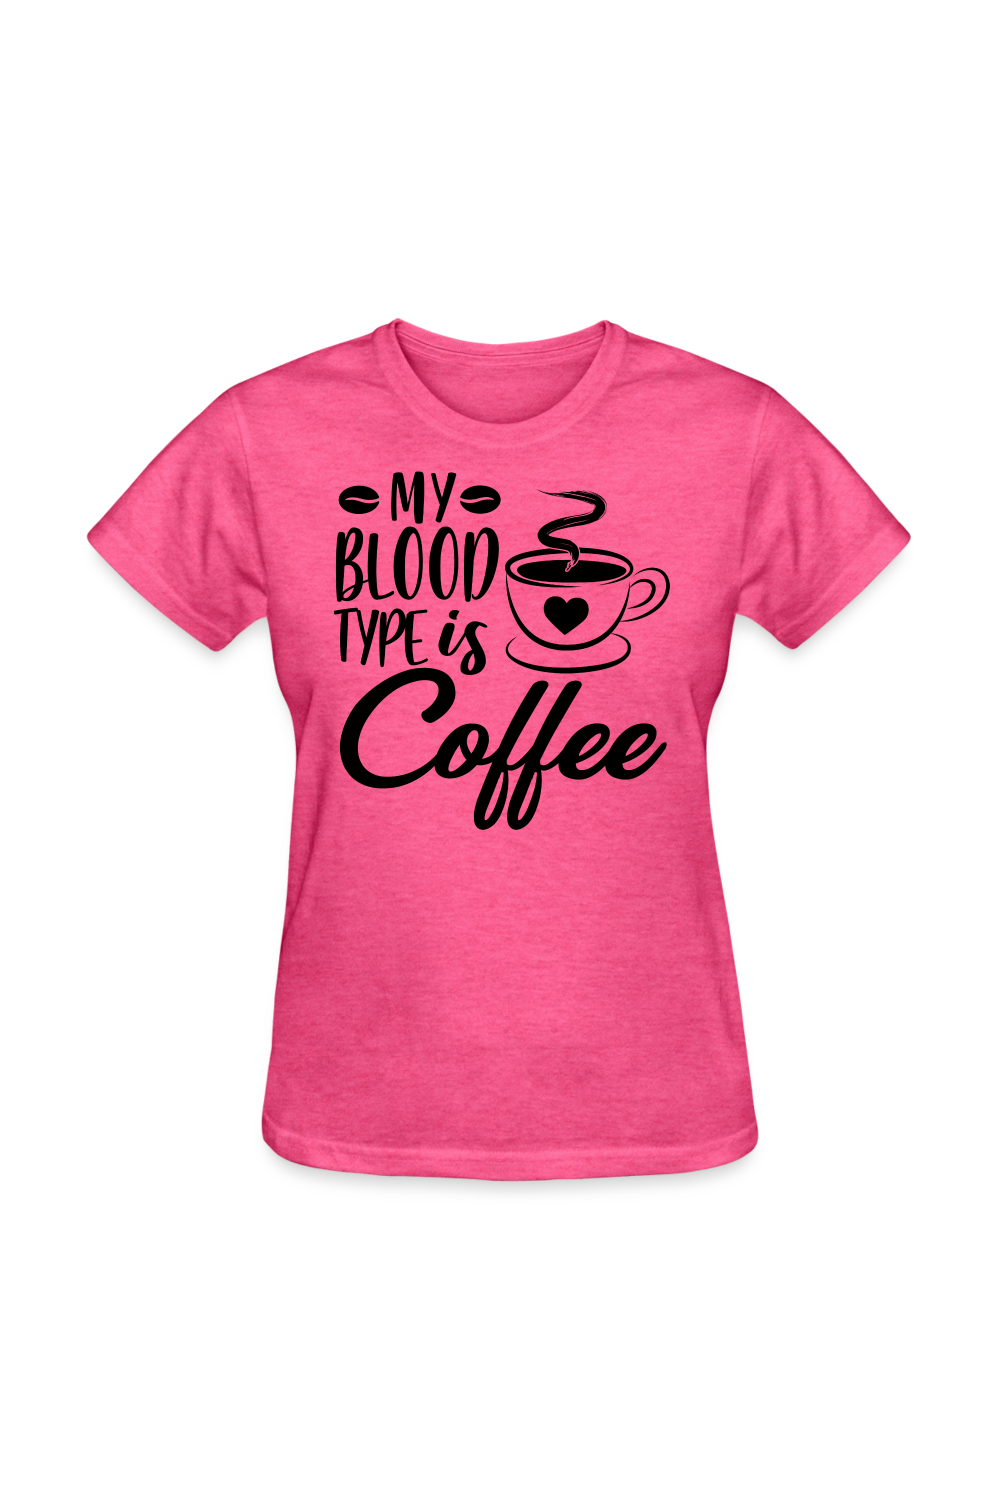 My Blood Type Is Coffee Women's Nurse T-Shirt - heather pink